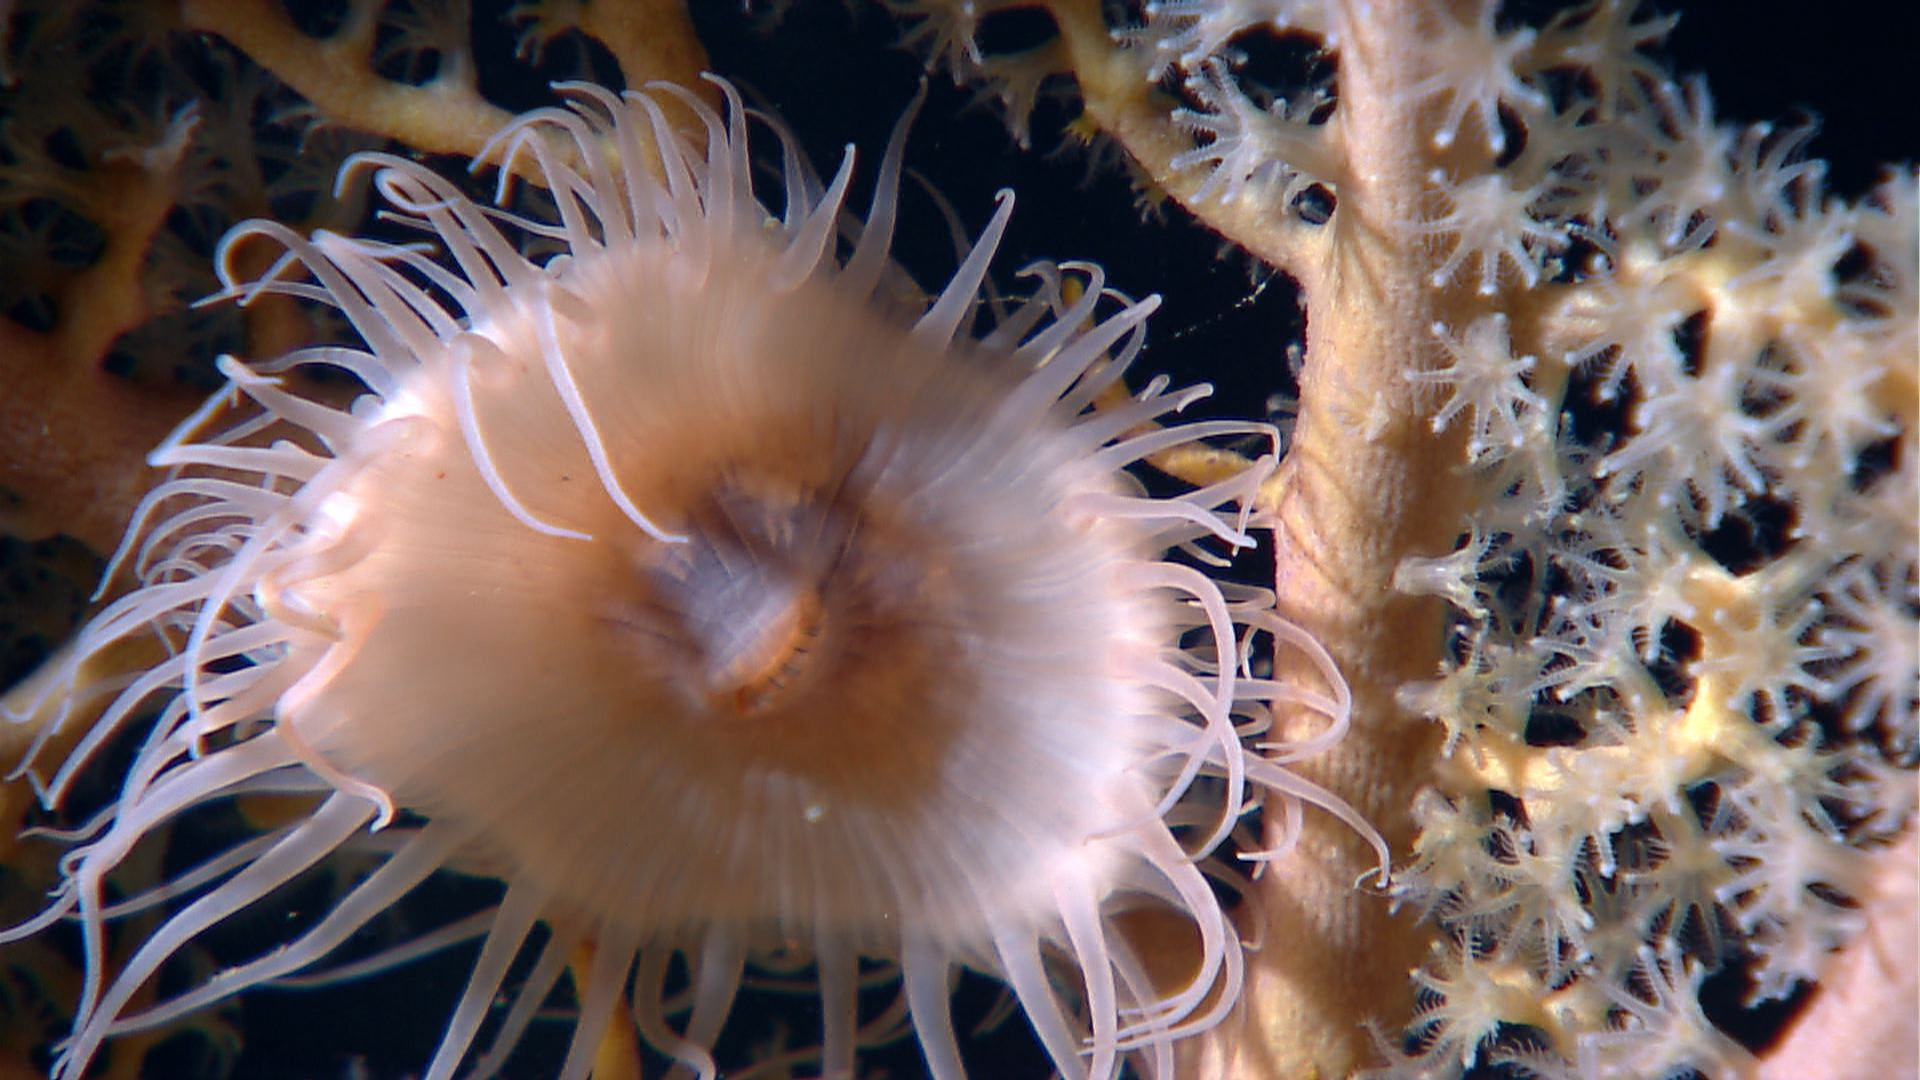 a close up view of an aquatic sea anemone